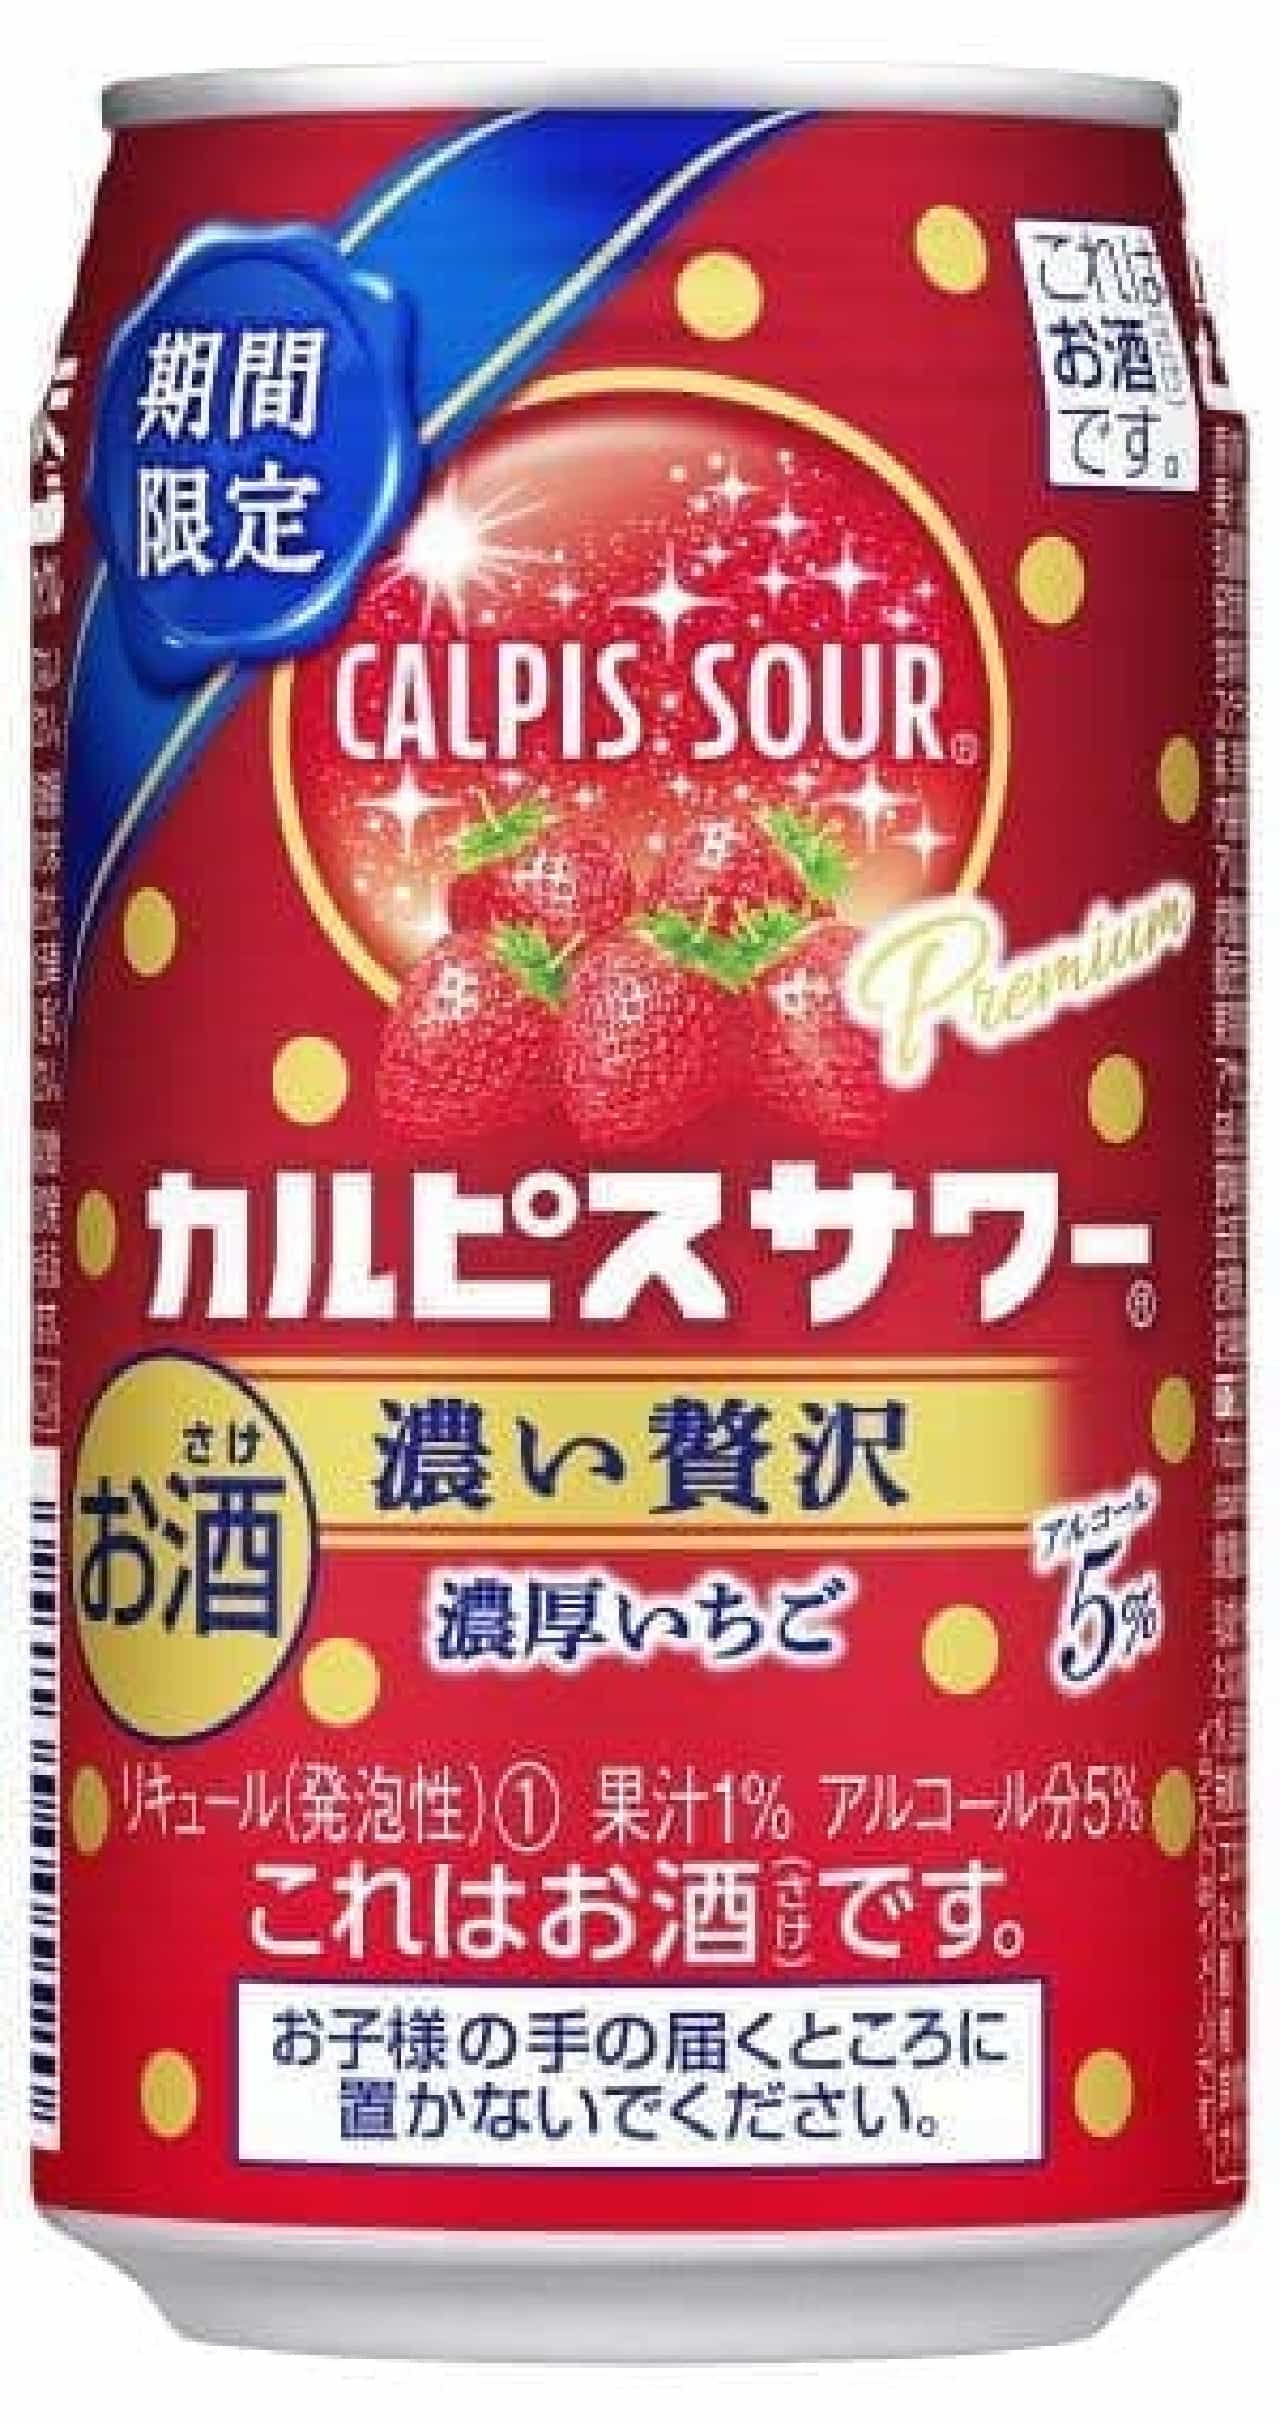 Calpis Sour "'Calpis Sour' Limited Time Rich Luxury Rich Strawberries"